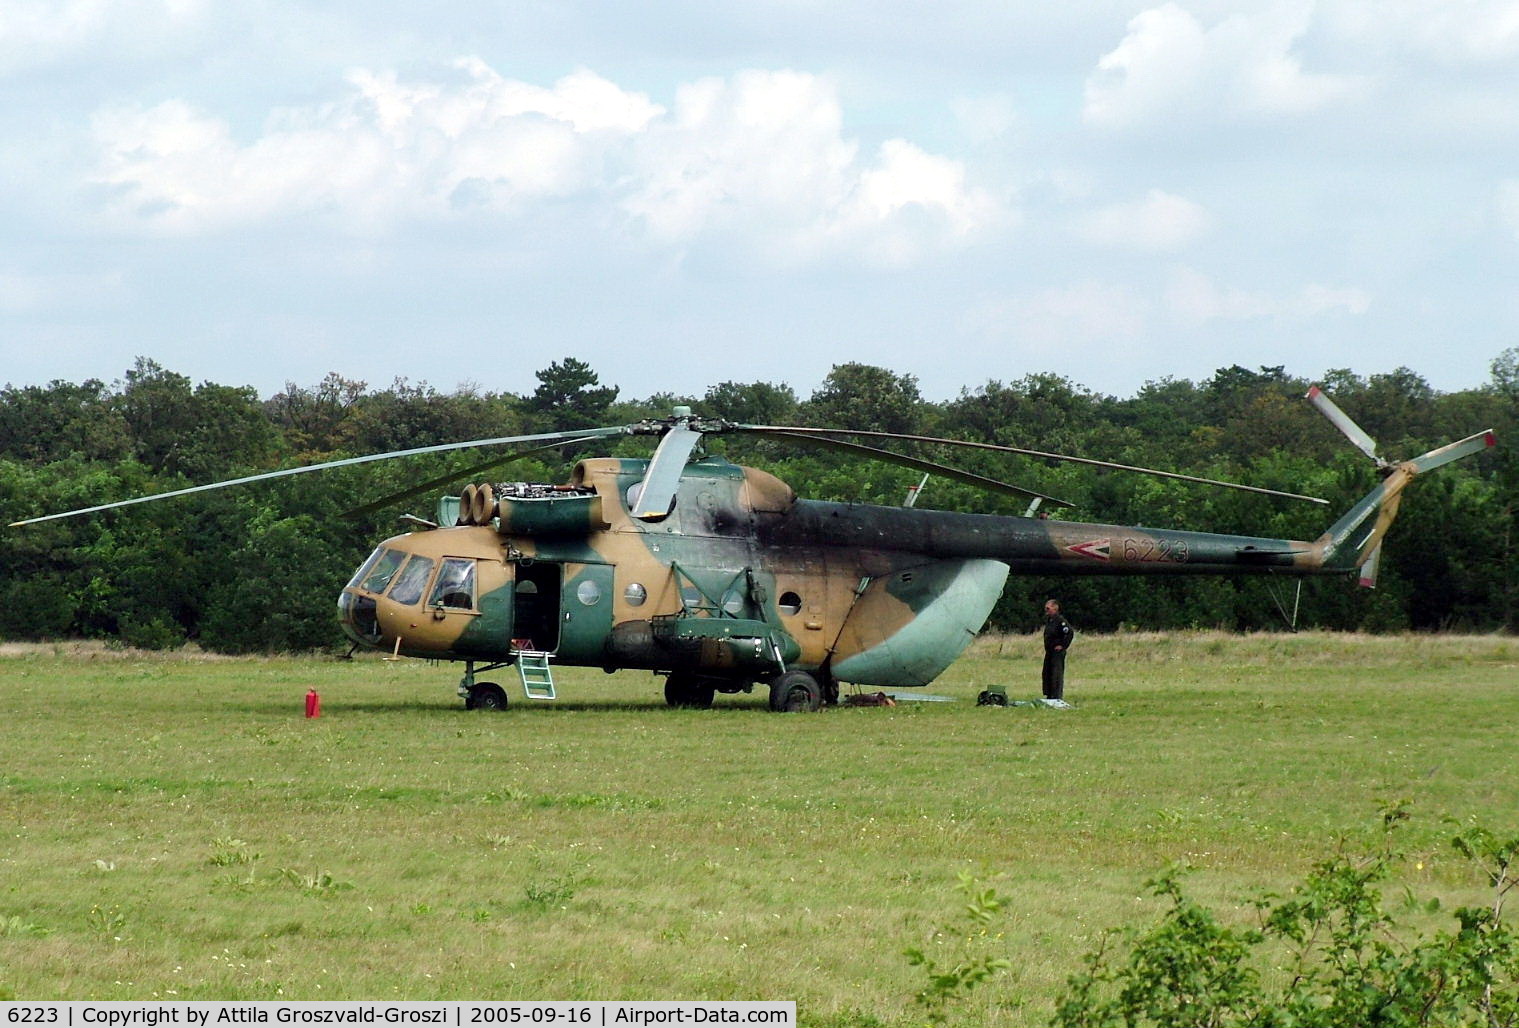 6223, 1980 Mil Mi-8T Hip C/N 226223, Veszprém-Jutas-Ujmajor temporary army helicopter base.